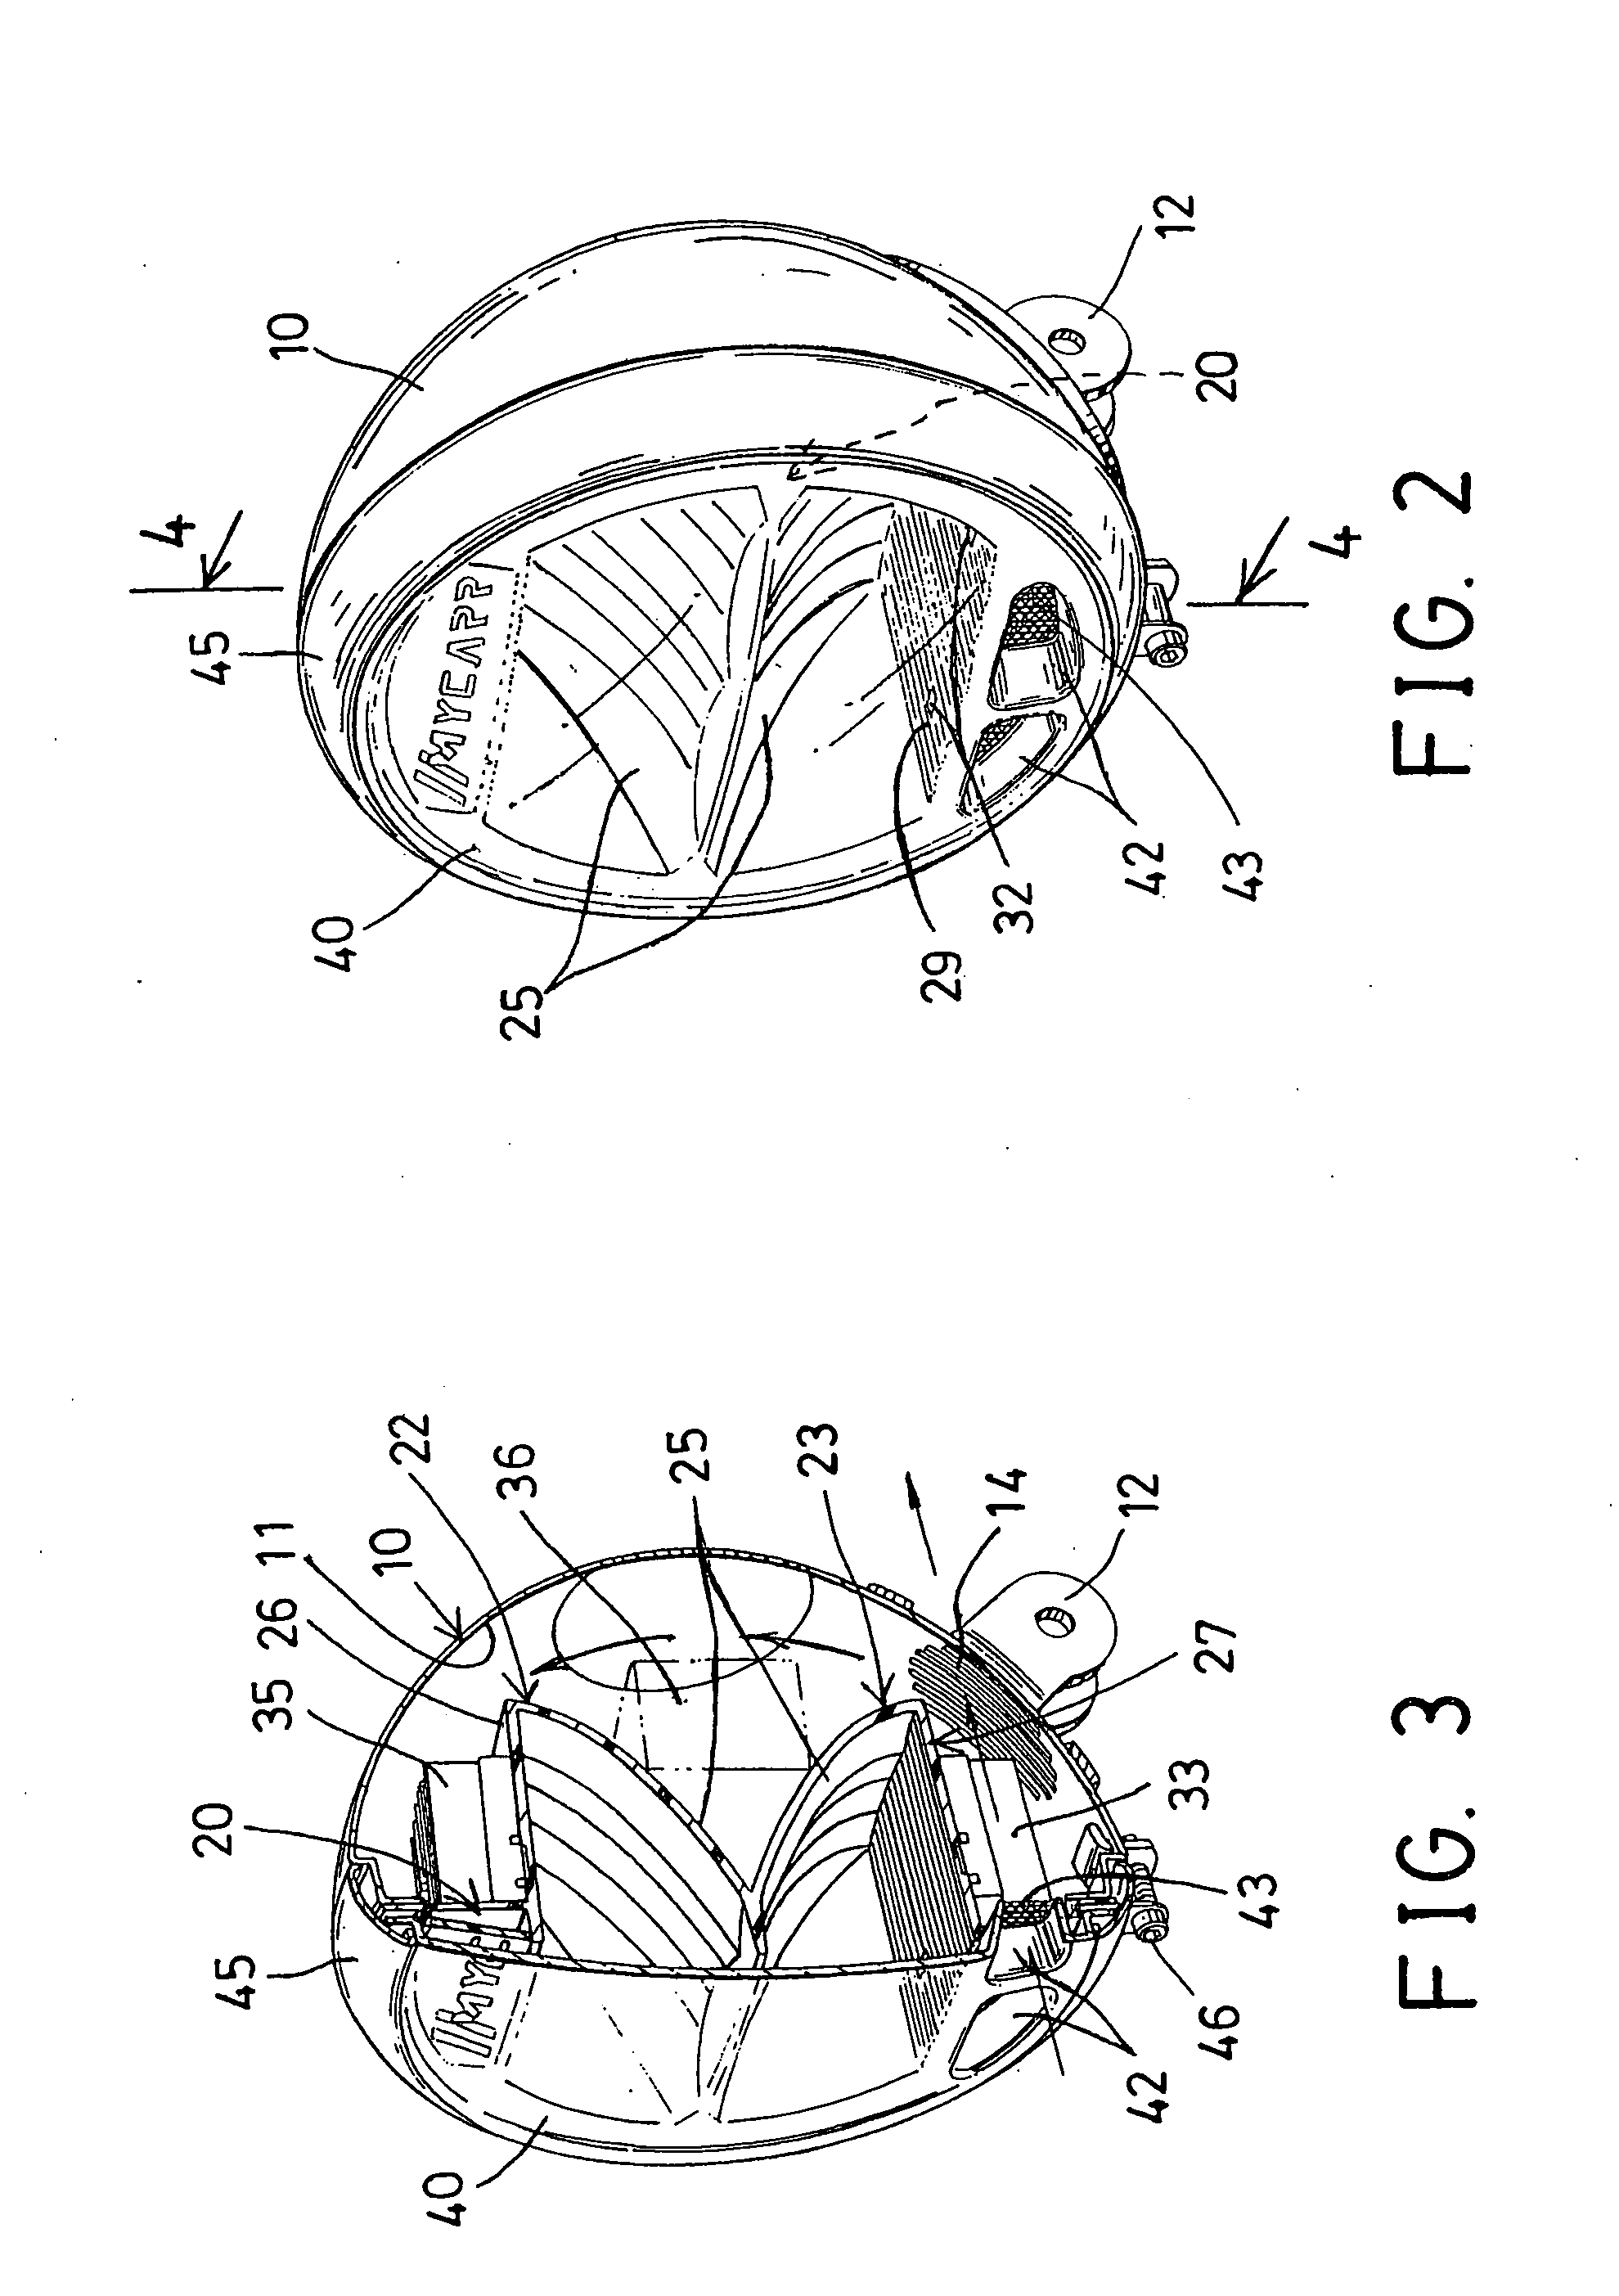 Vehicle head light device